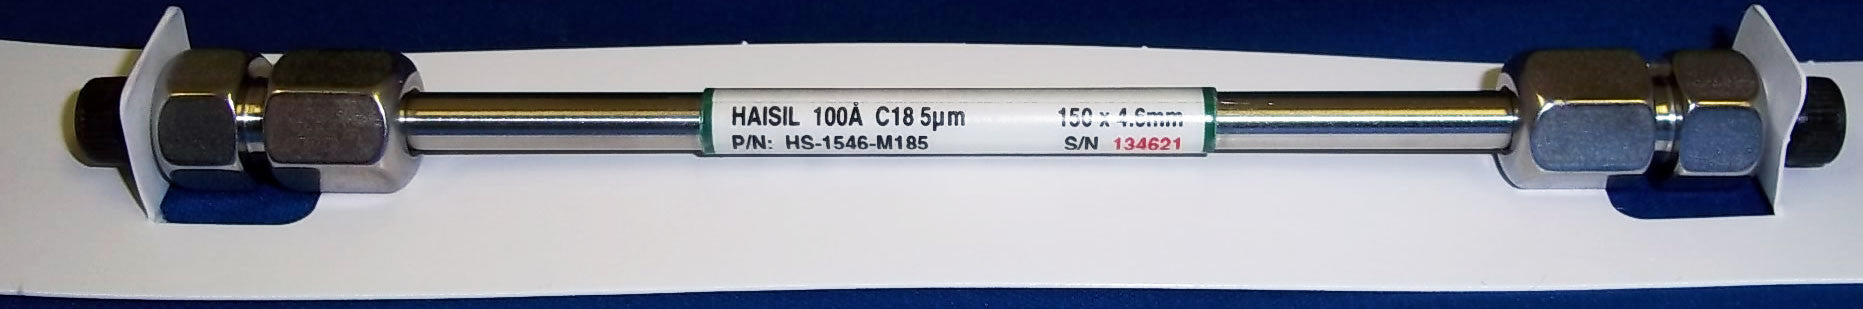 150 x 4.6mm Cyano SS Column